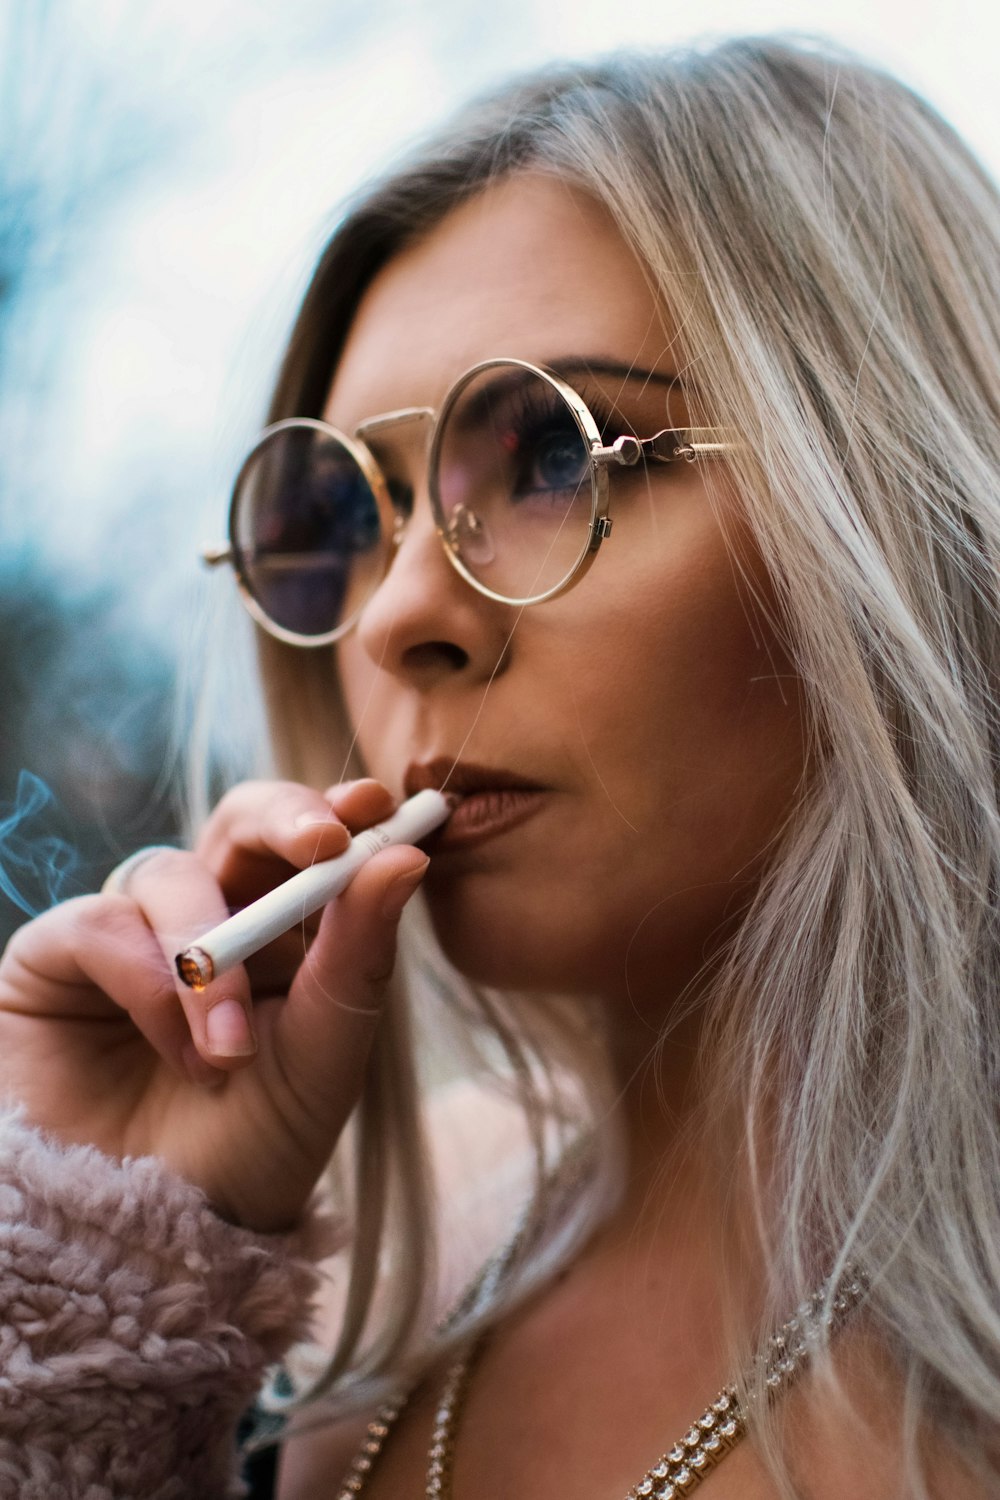 person holding cigarette stick wearing eyeglasses